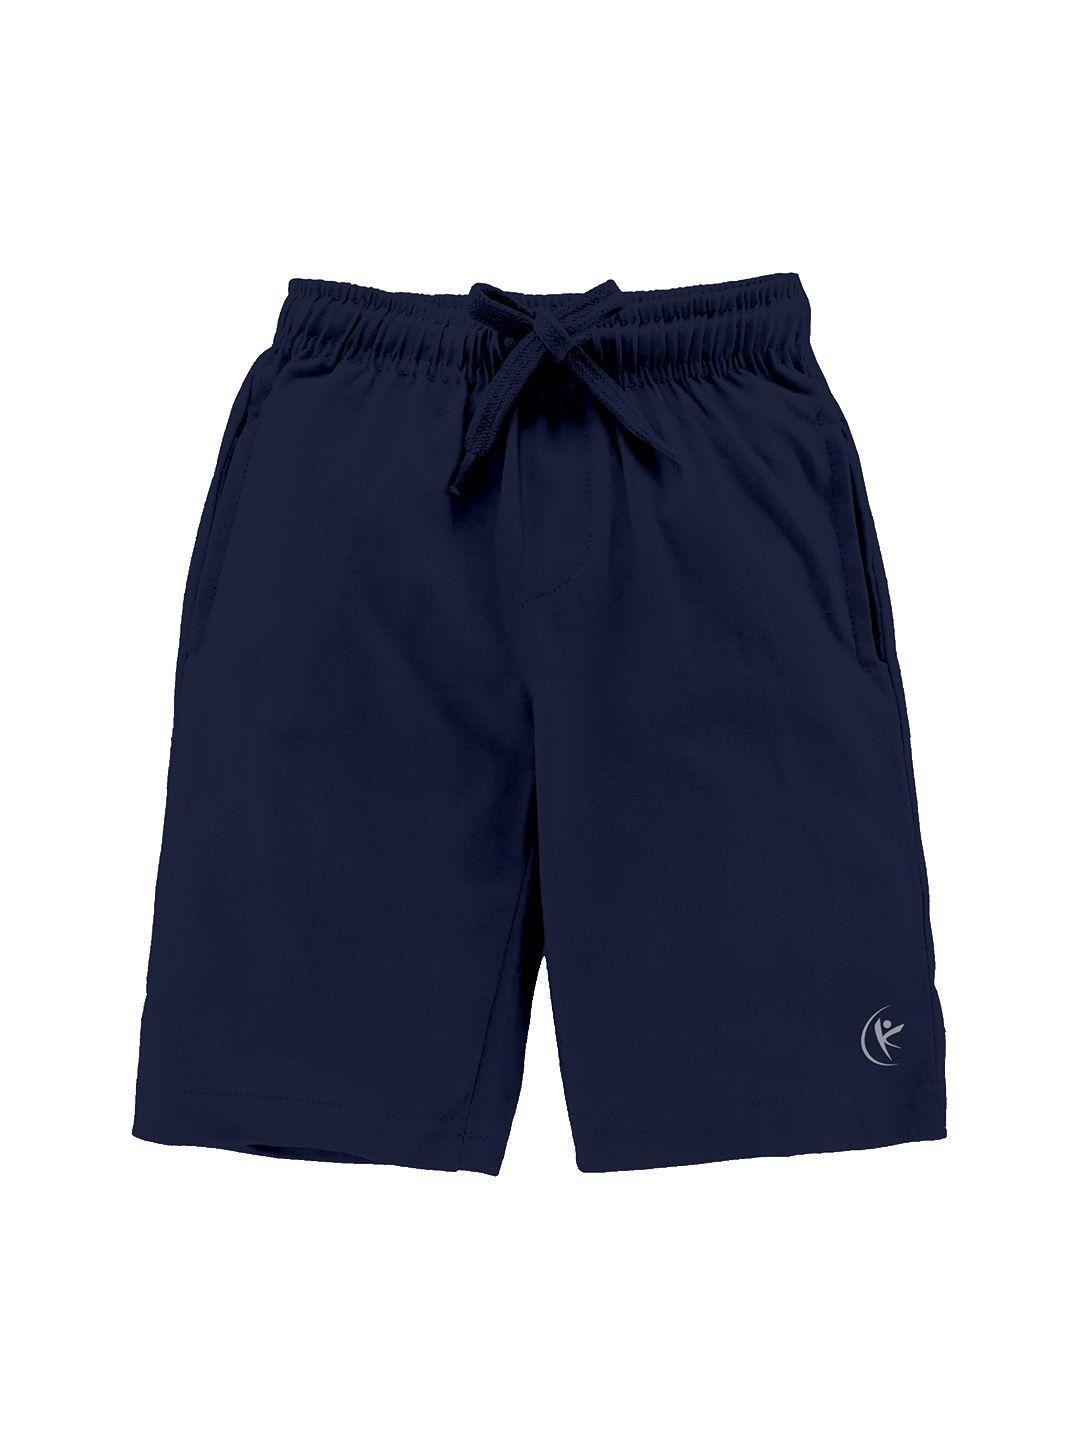 KiddoPanti Boys Navy Blue Cotton Shorts